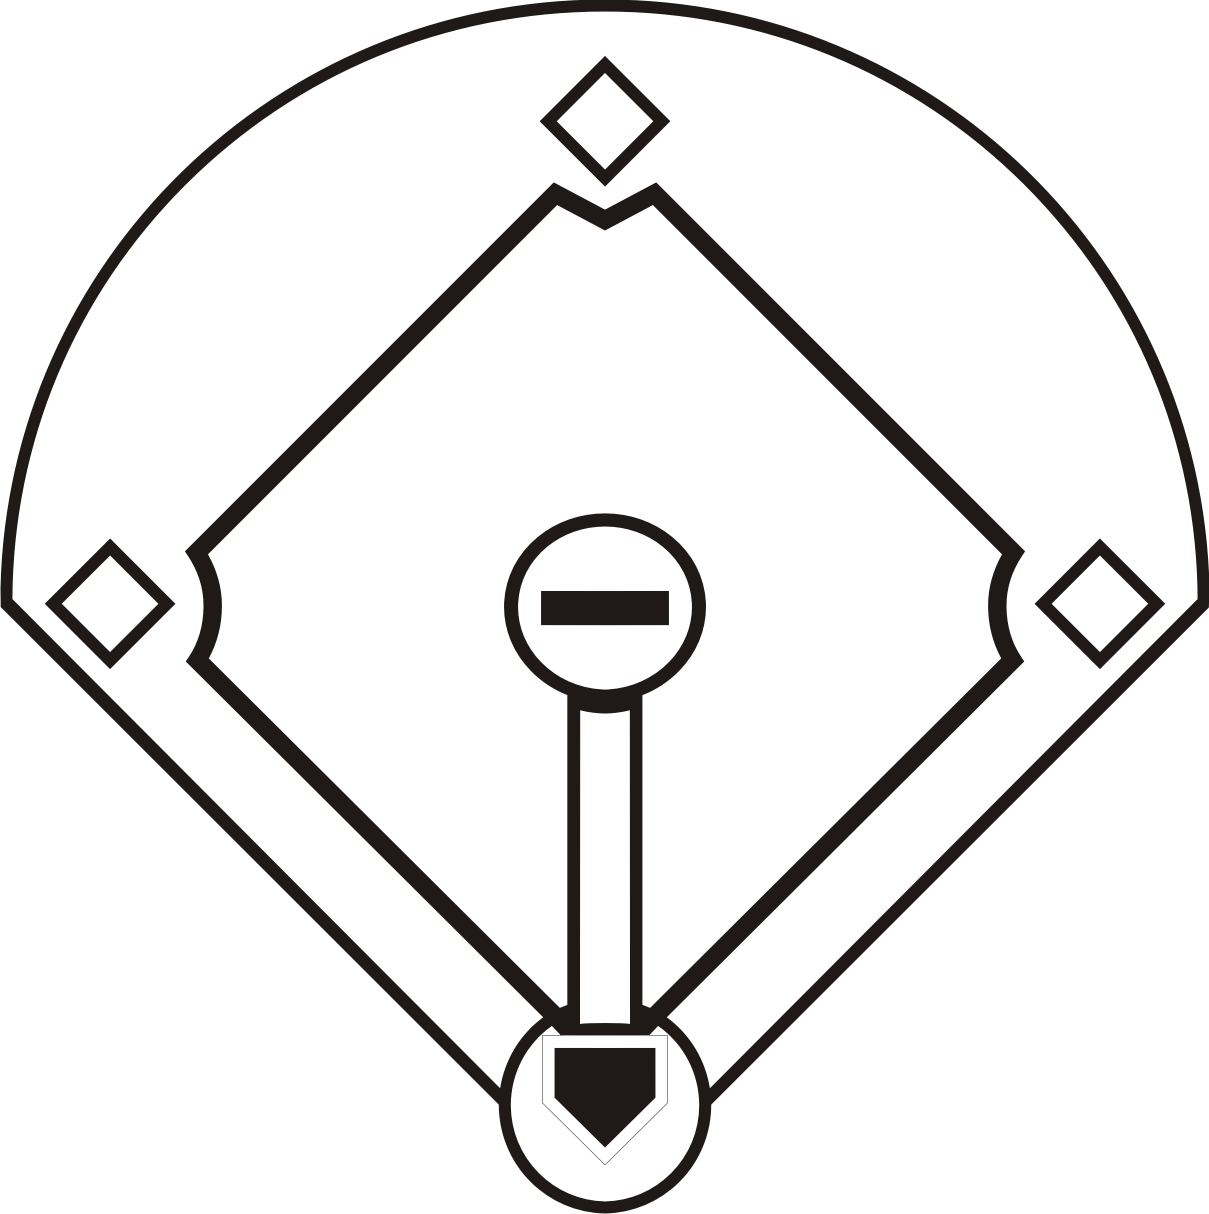 Diamond Field in Softball images